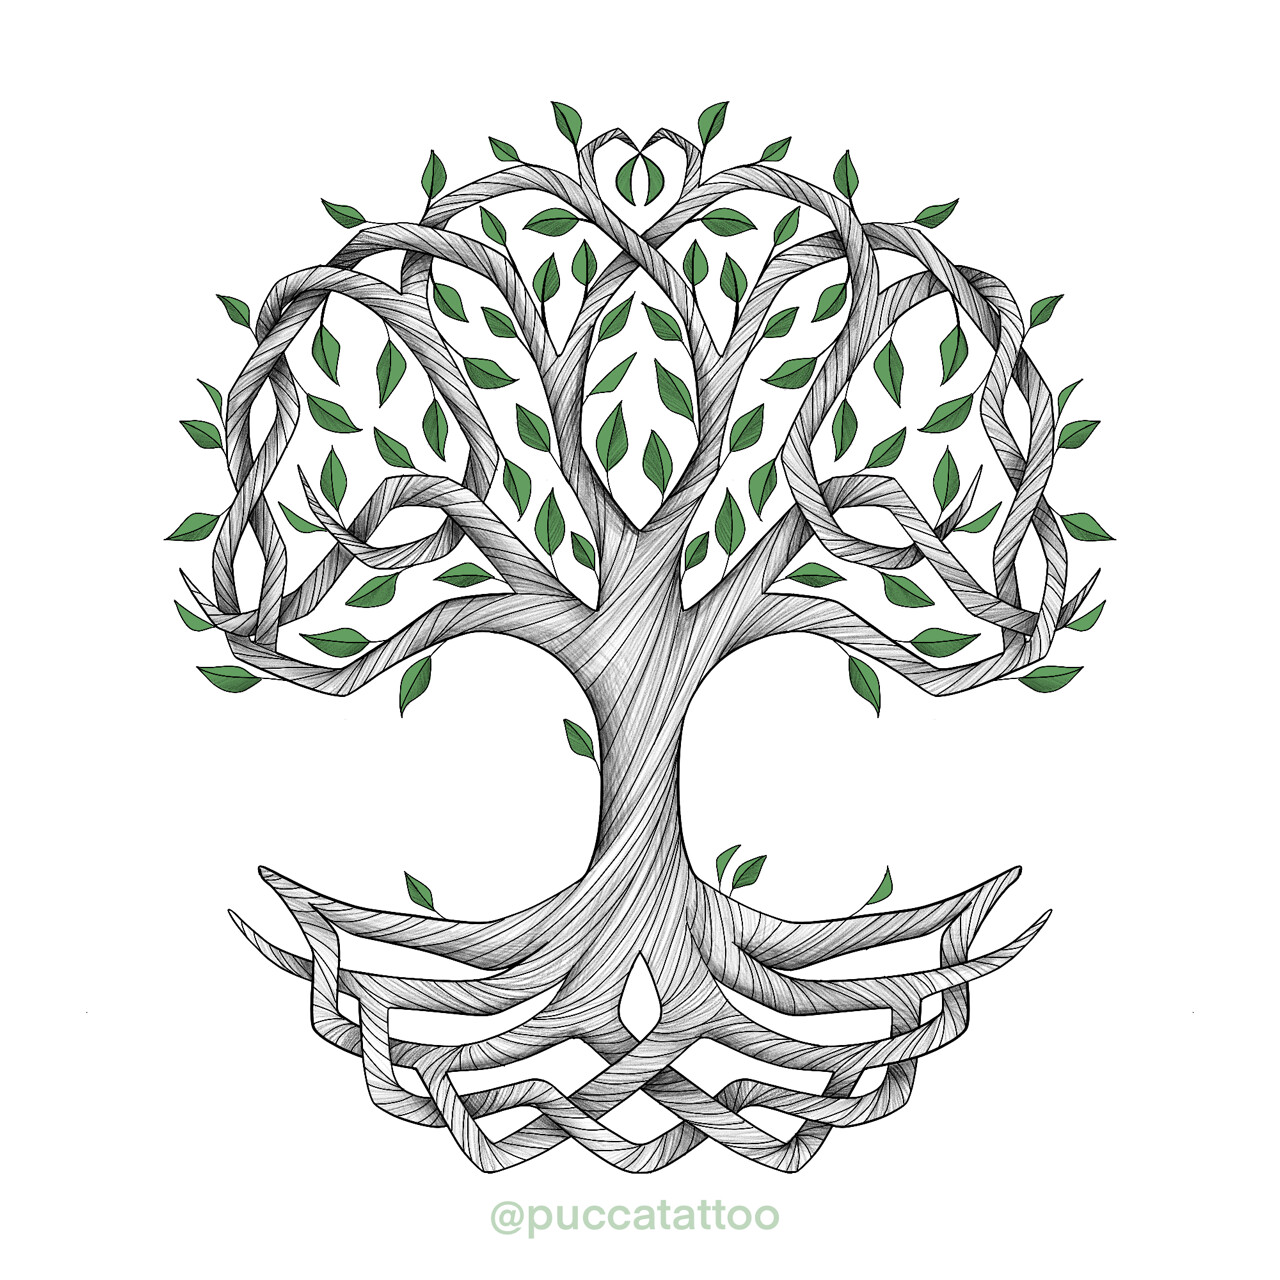 Stunning Tree Tattoos, Designs, Ideas & Meanings